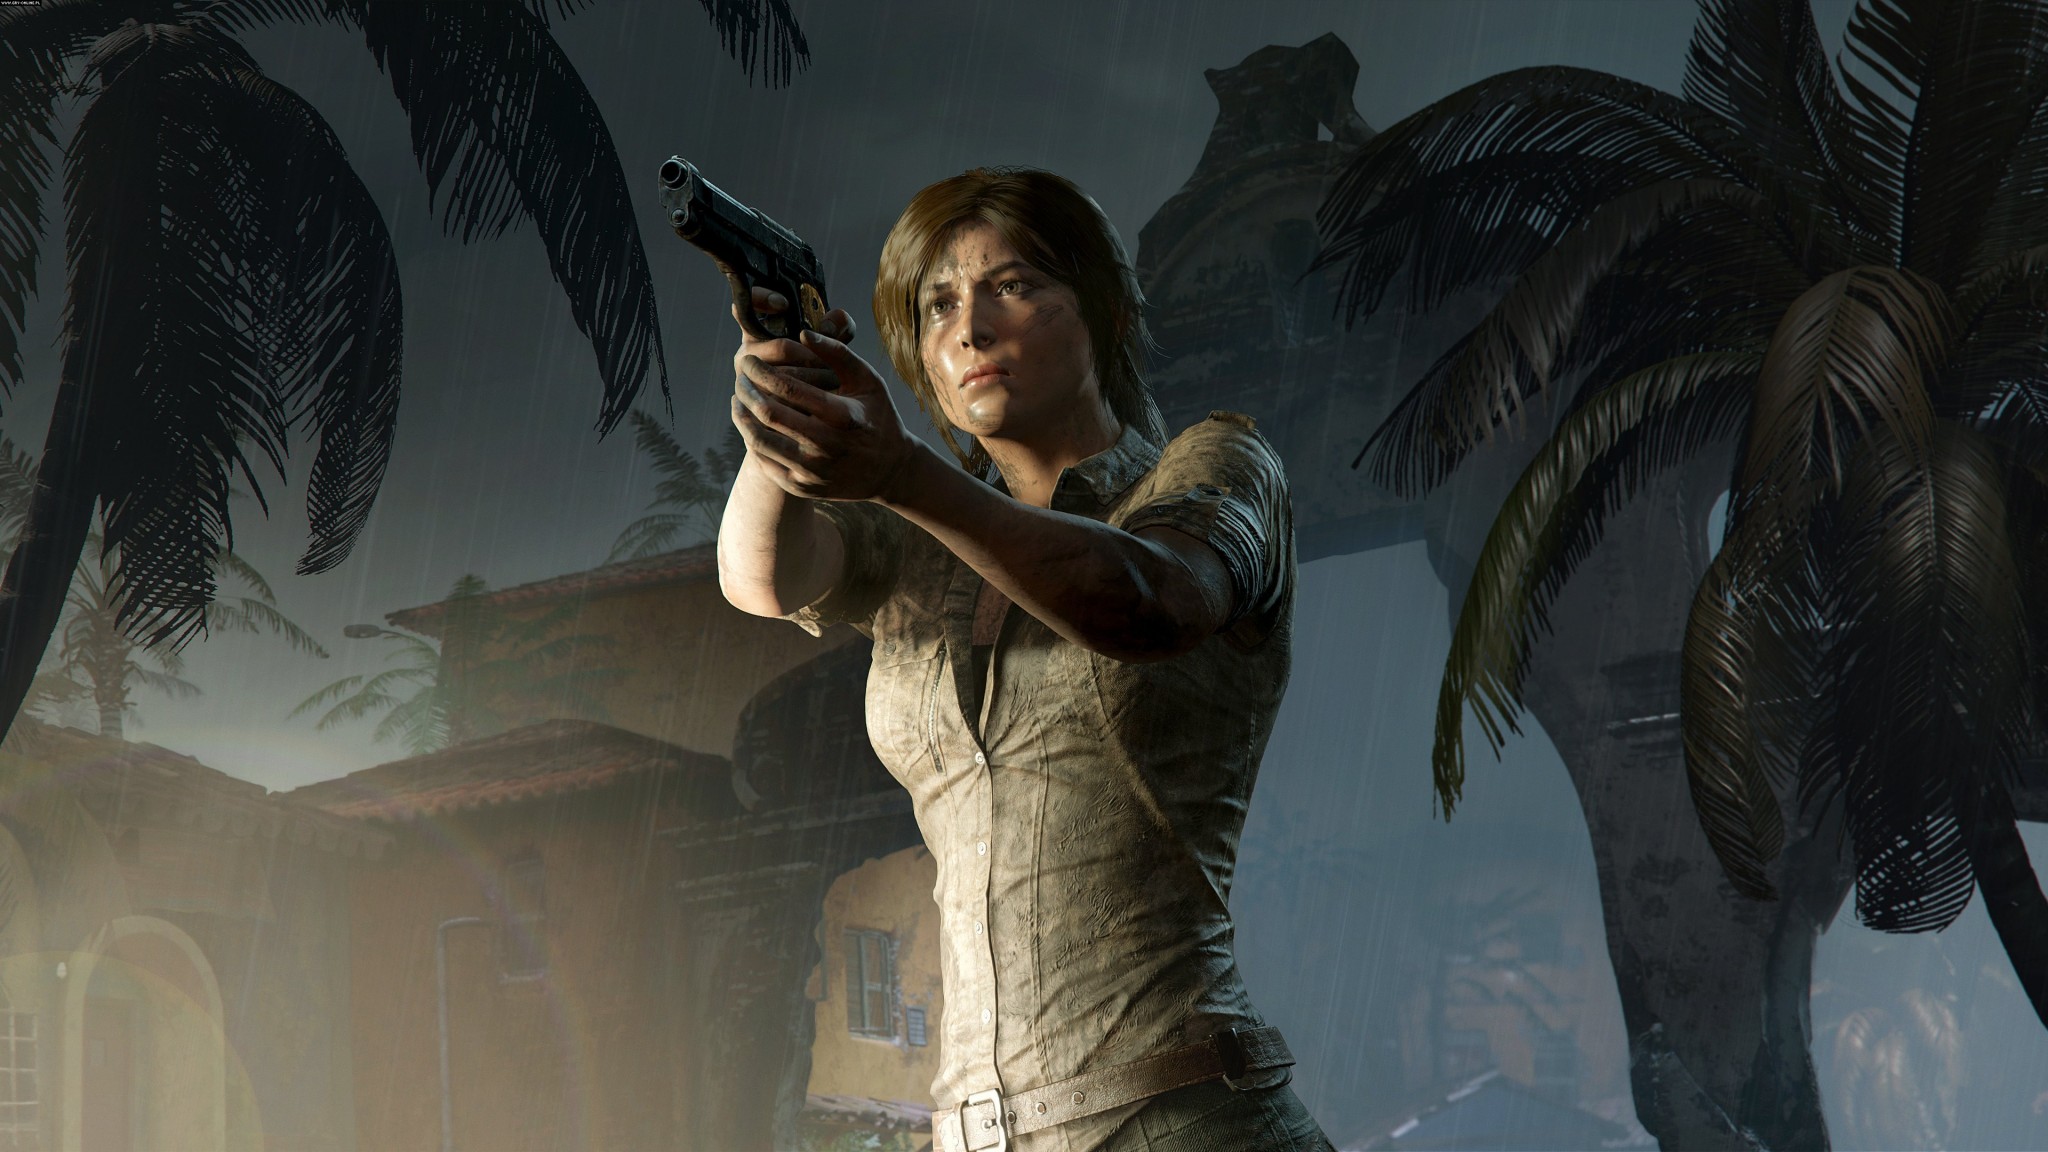 Tomb Raider 2013 